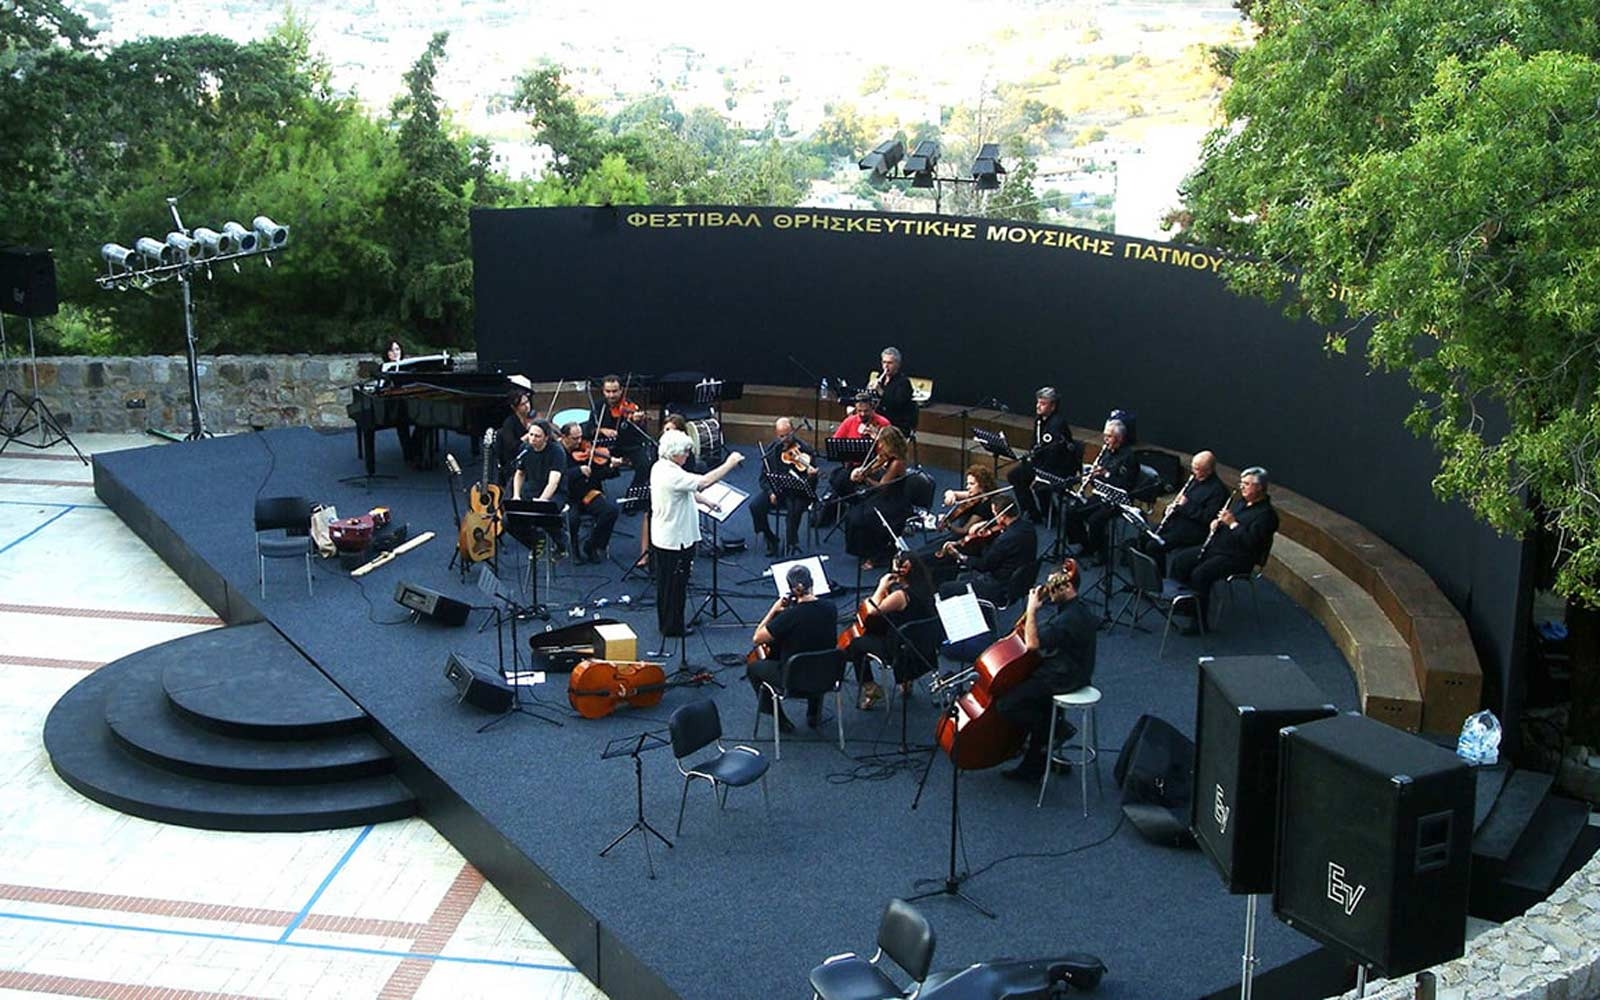 Festival of Religious Music of Patmos